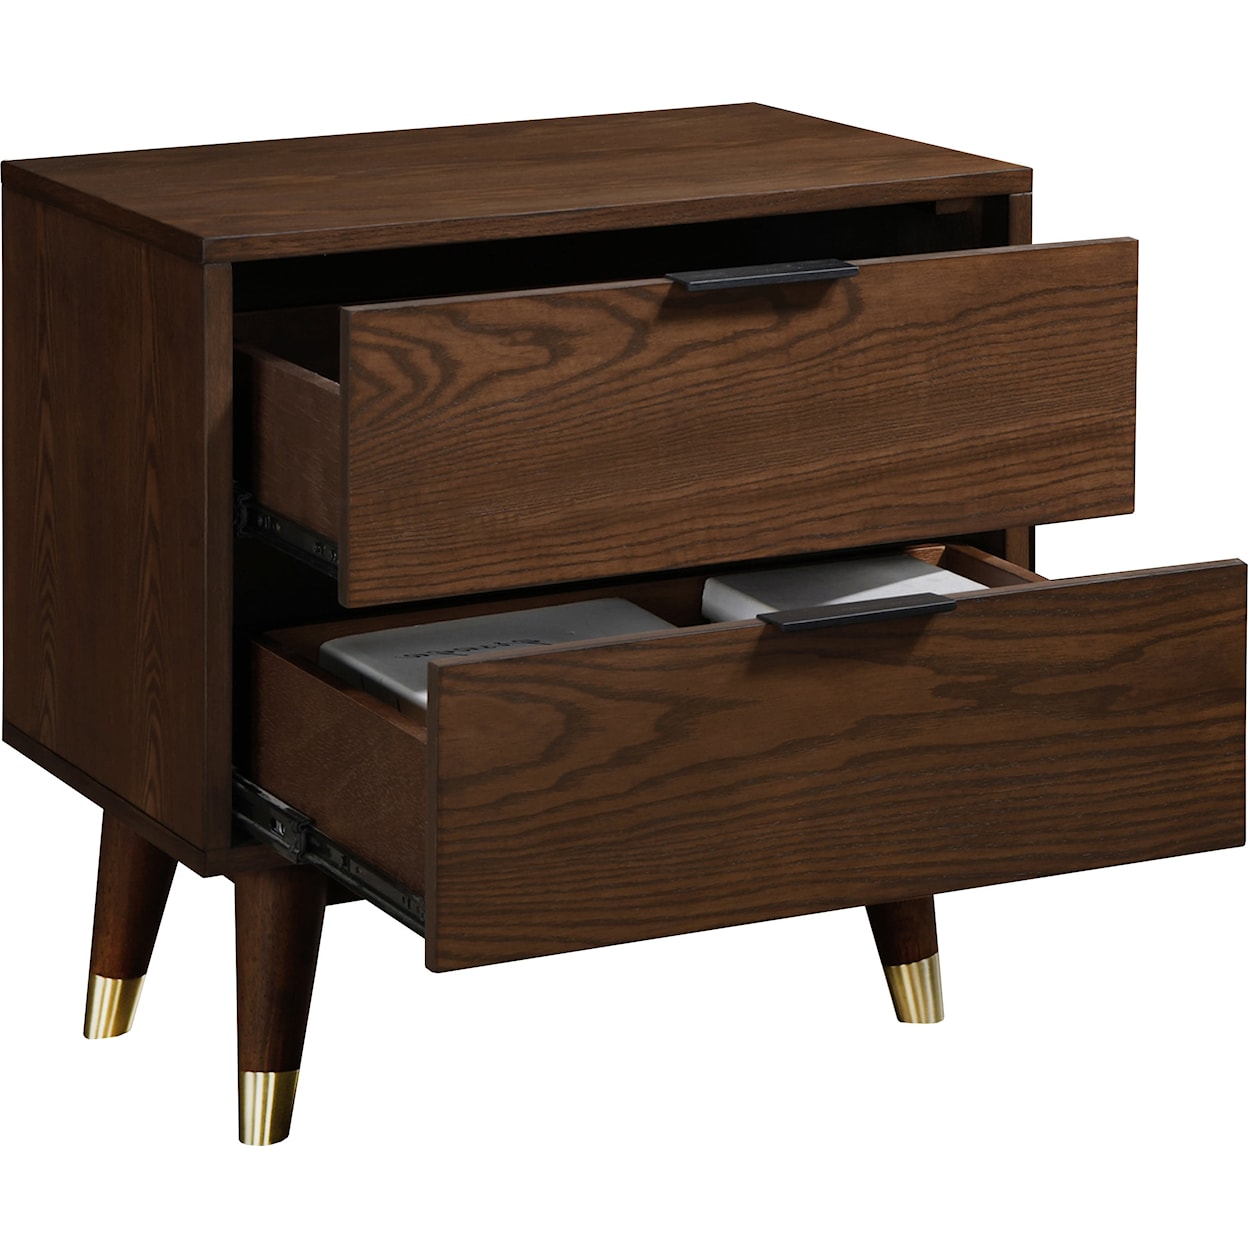 Meridian Furniture Vance 2-Drawer Nightstand